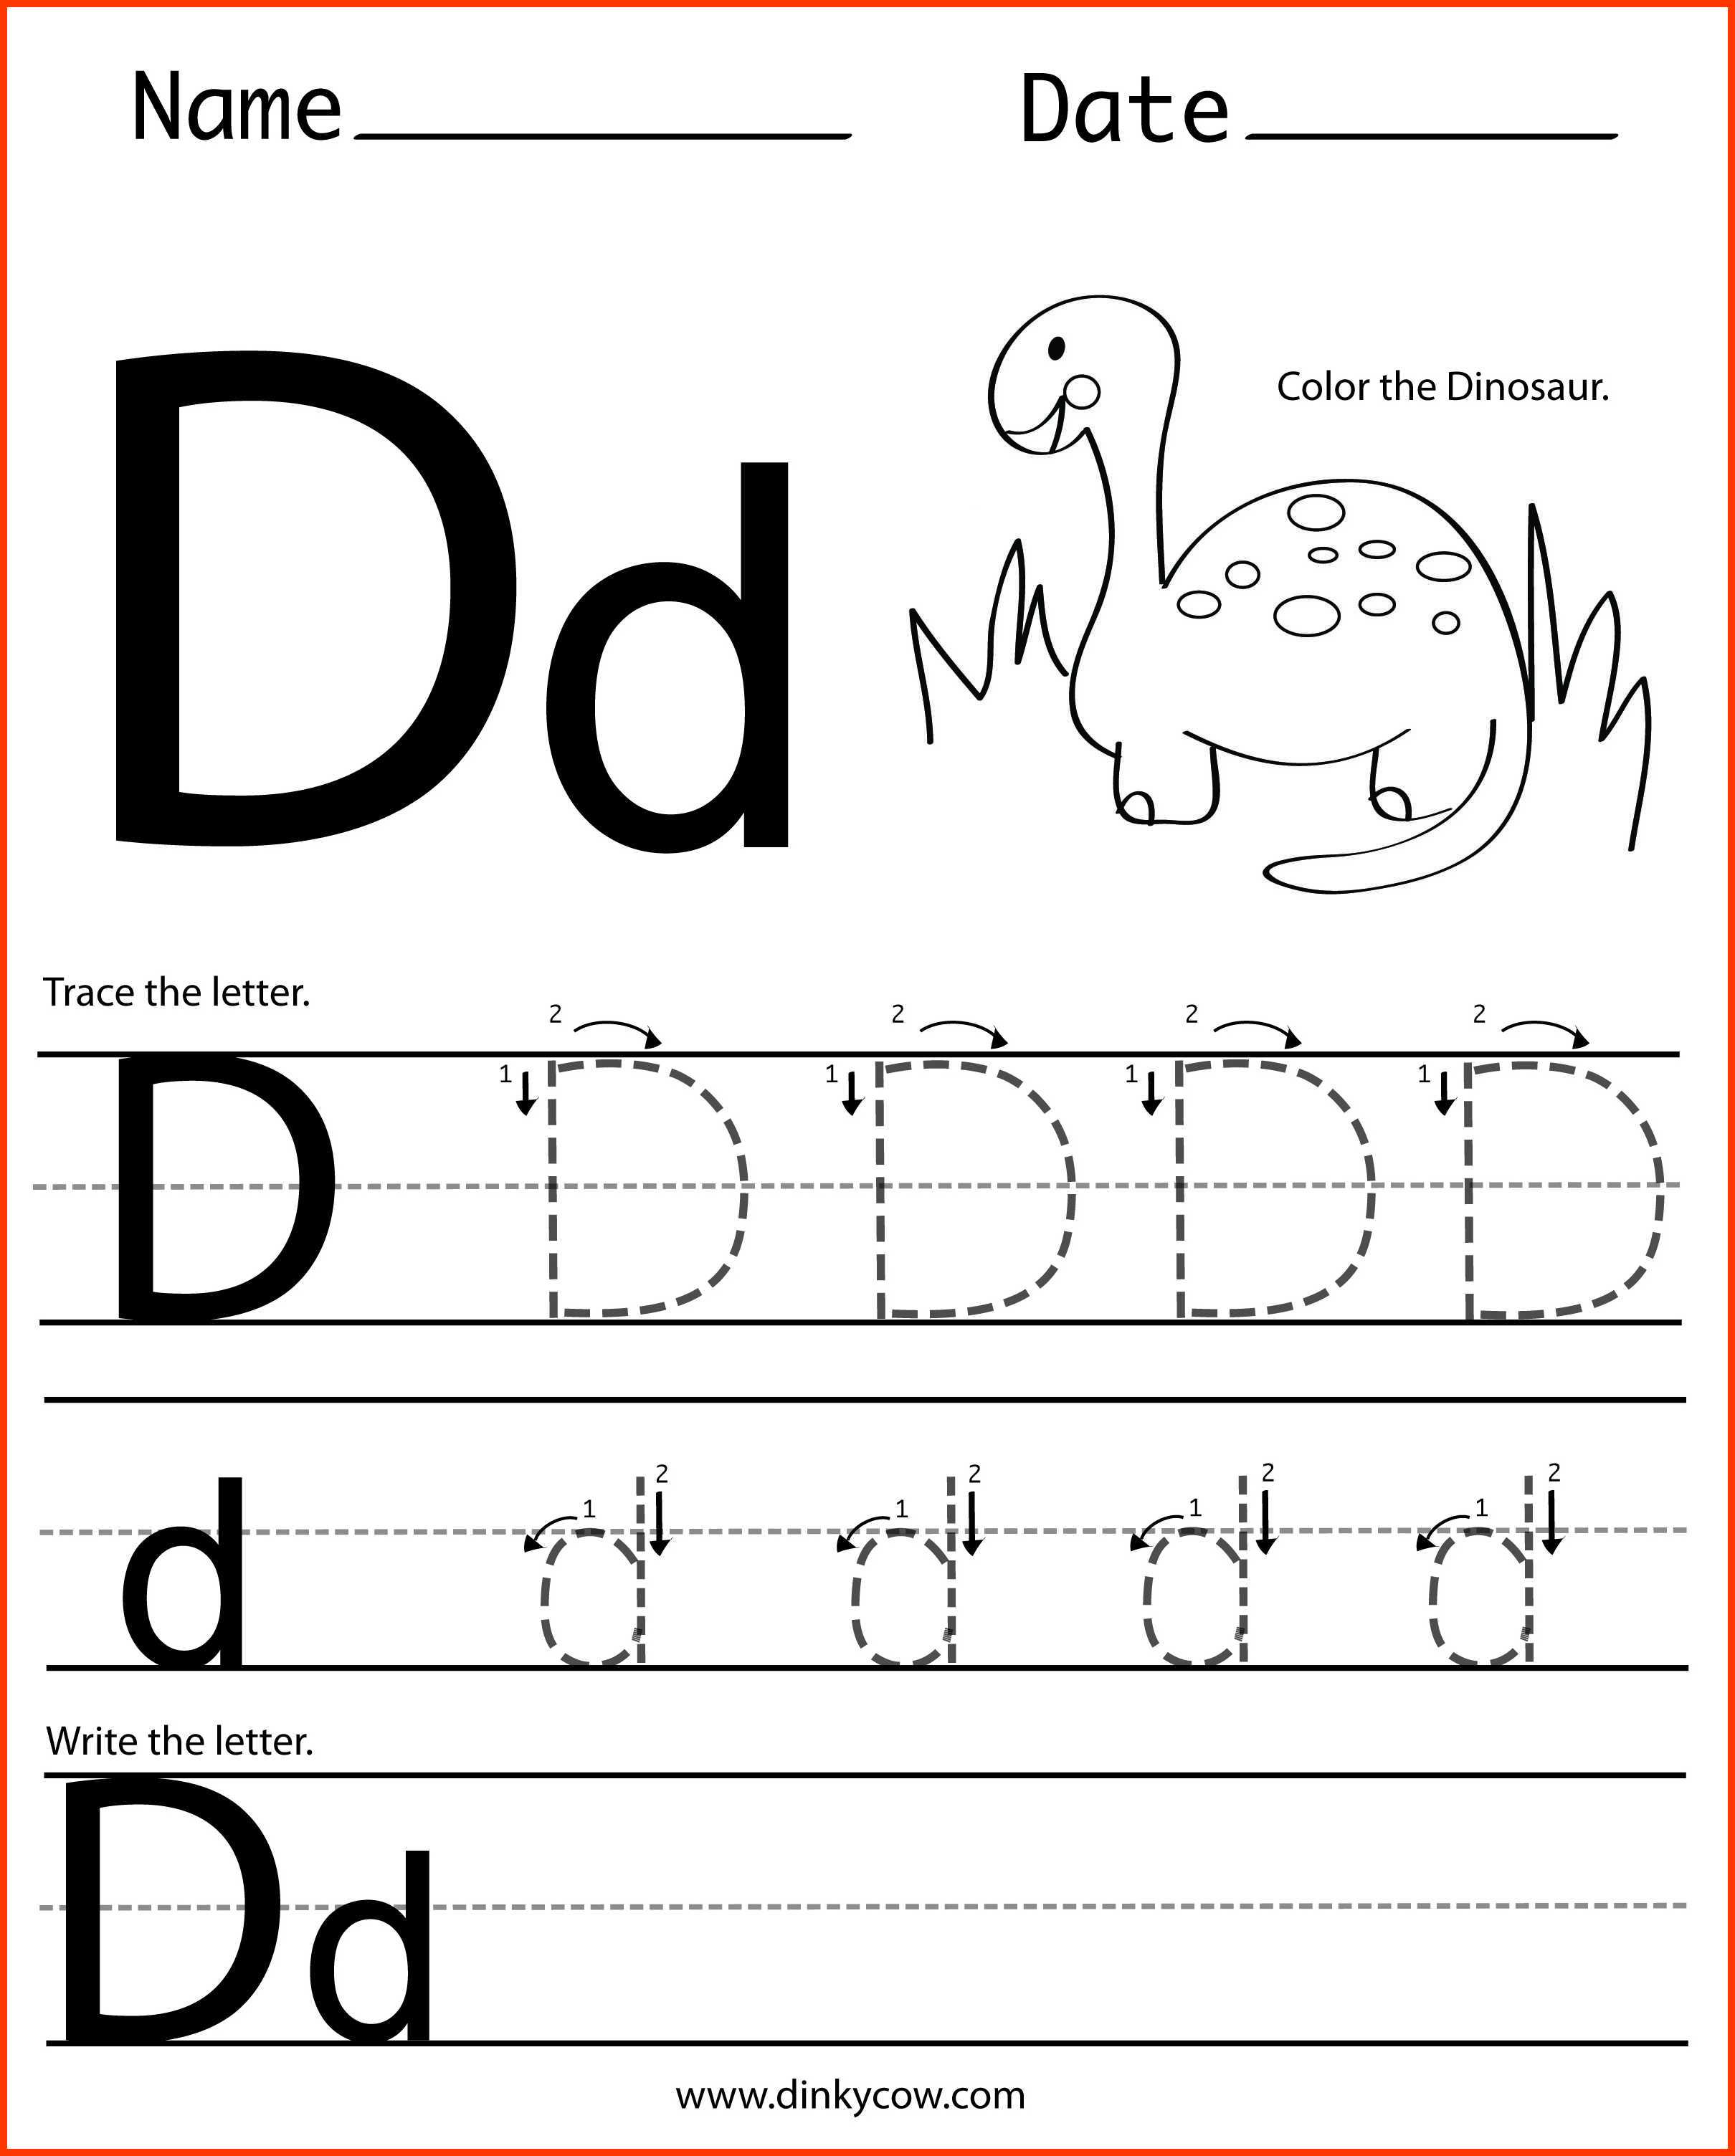 Preschool Writing Worksheets Free Printable Also Free Letter D Worksheets Writing Free Worksheet Daily